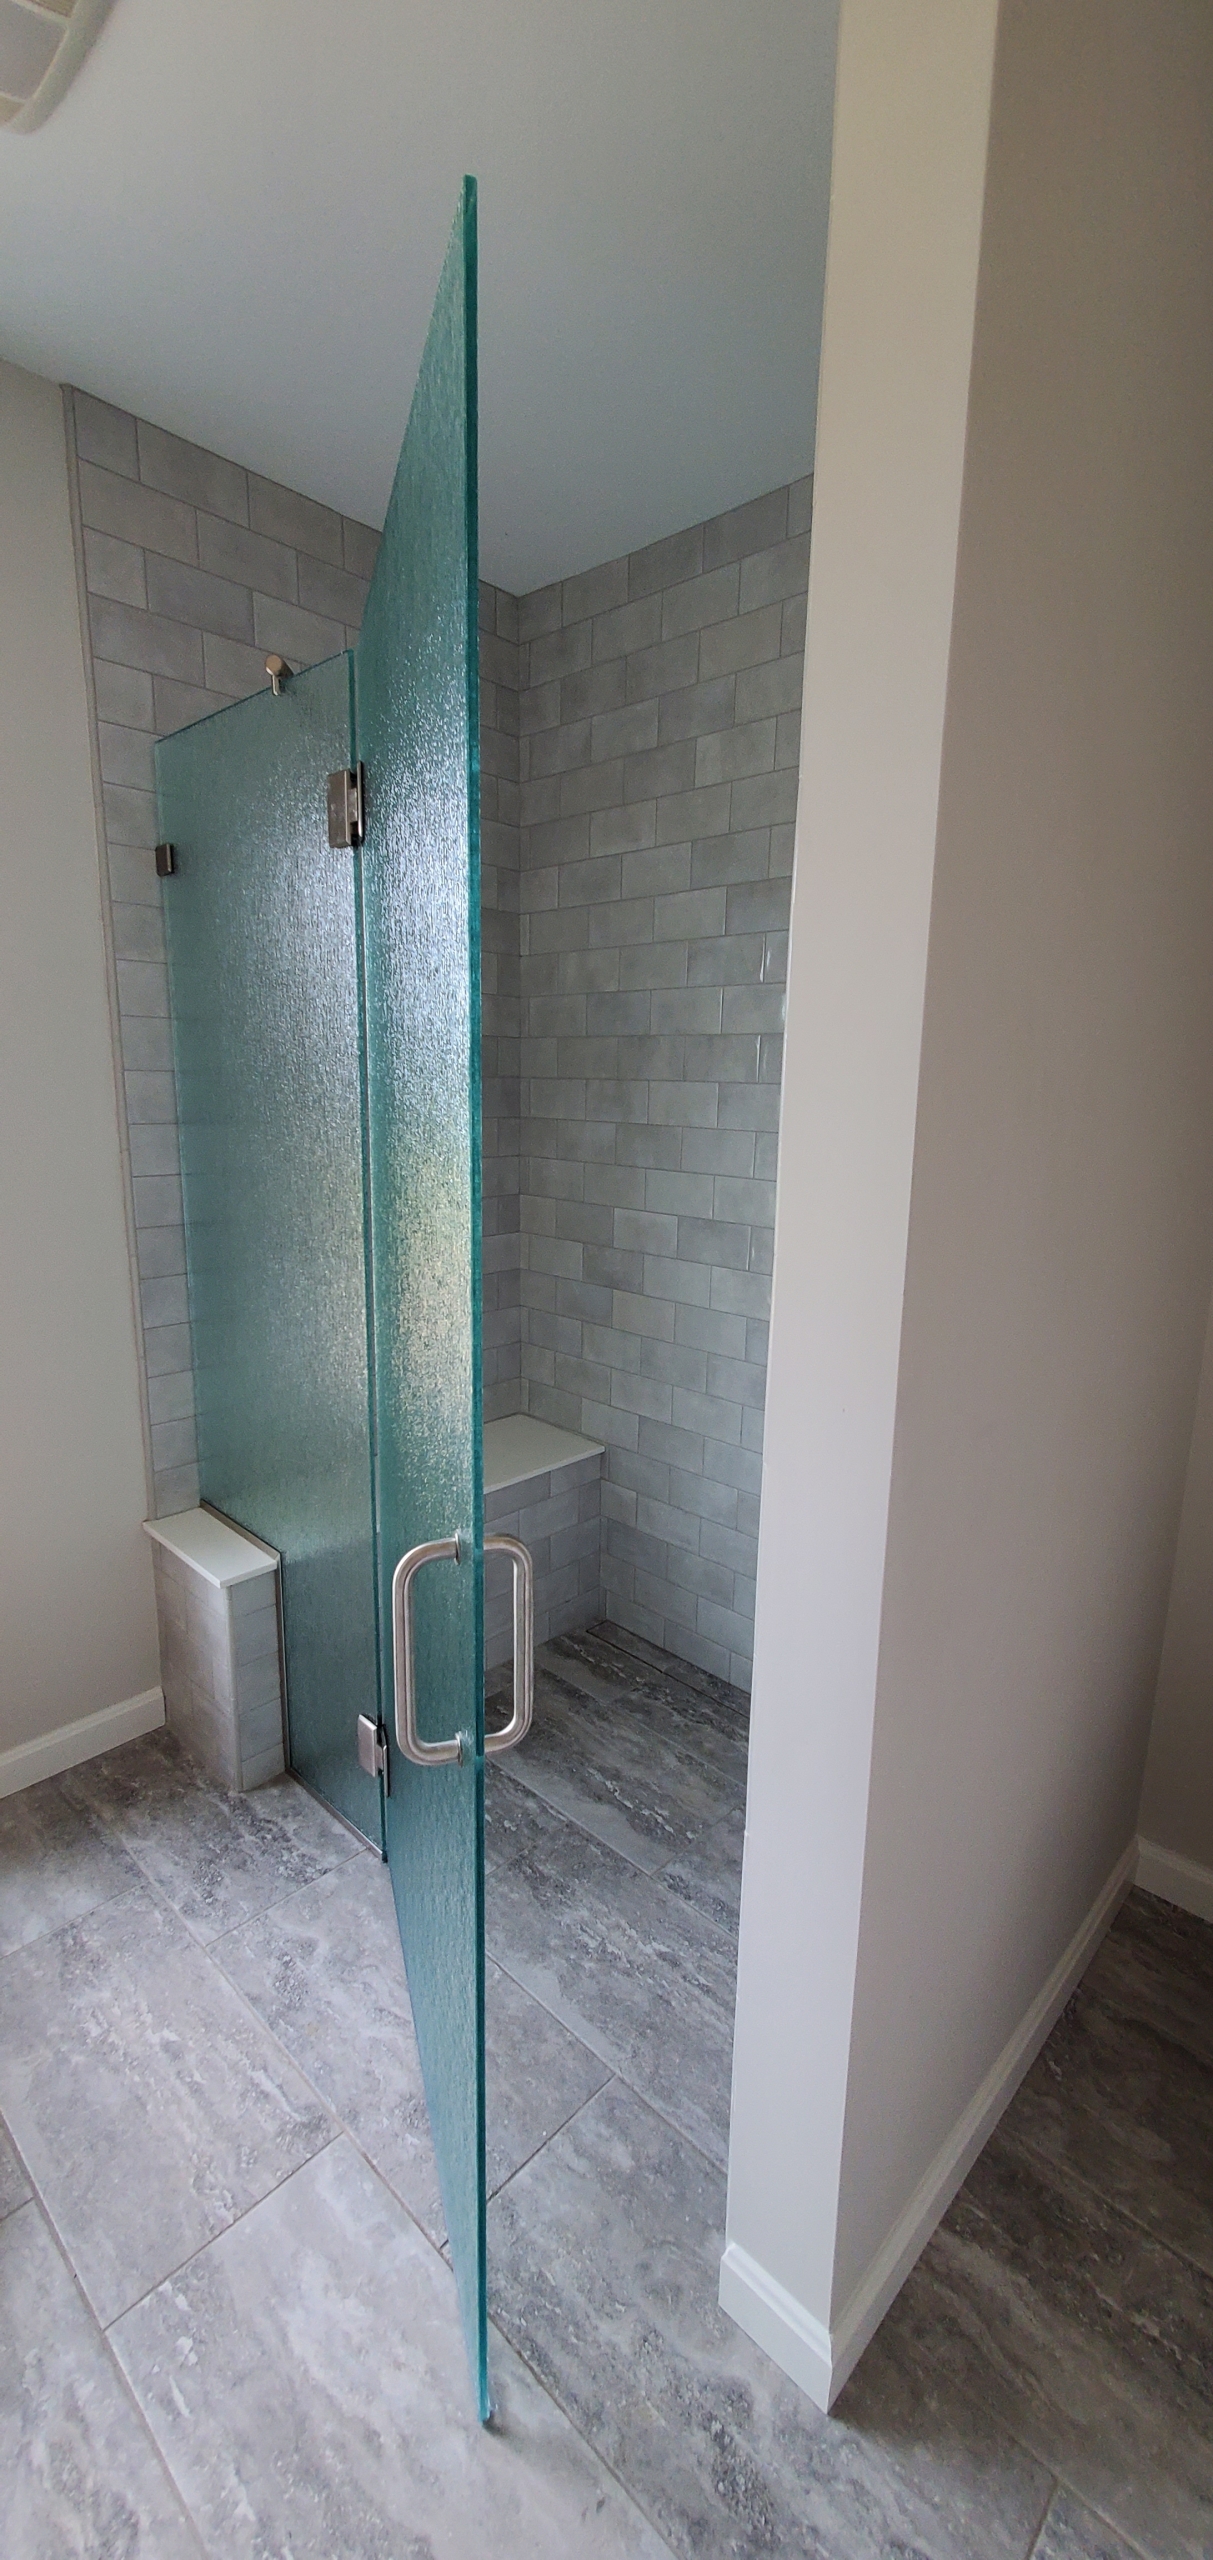 Glass shower door and tile shower